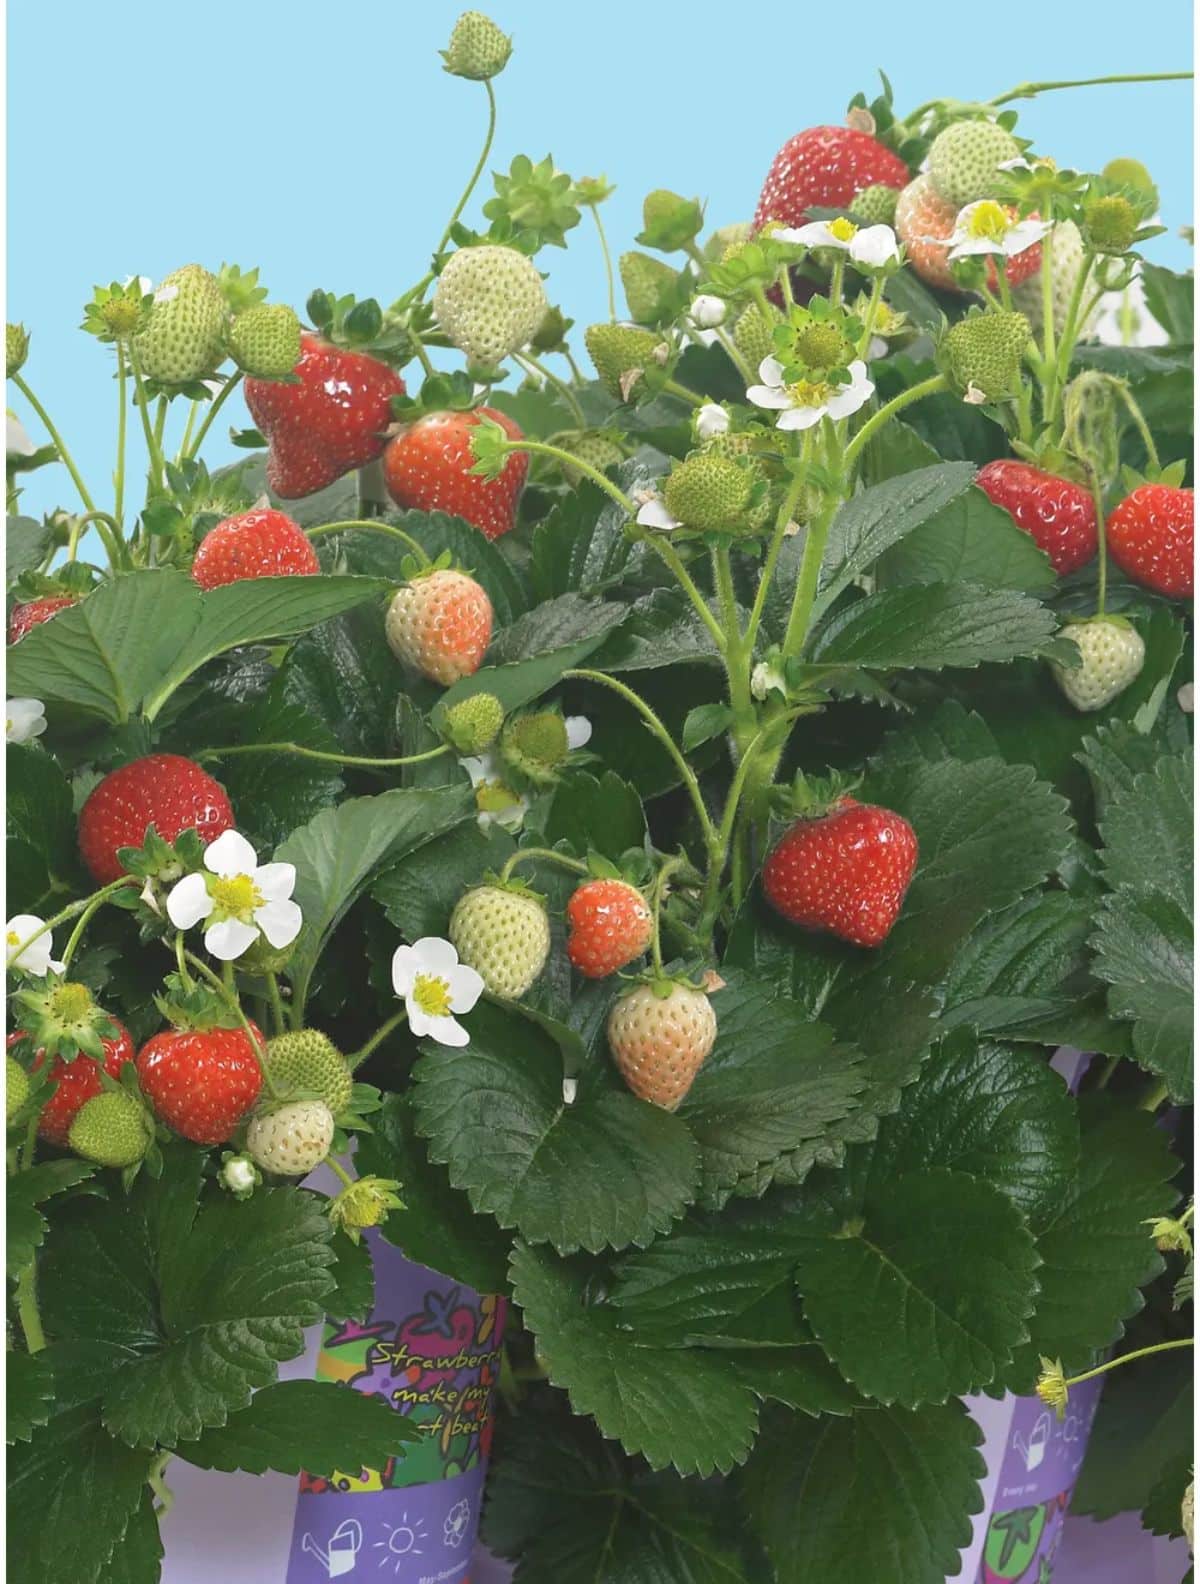 Delizz strawberry plants with ripe and unripe fruits .